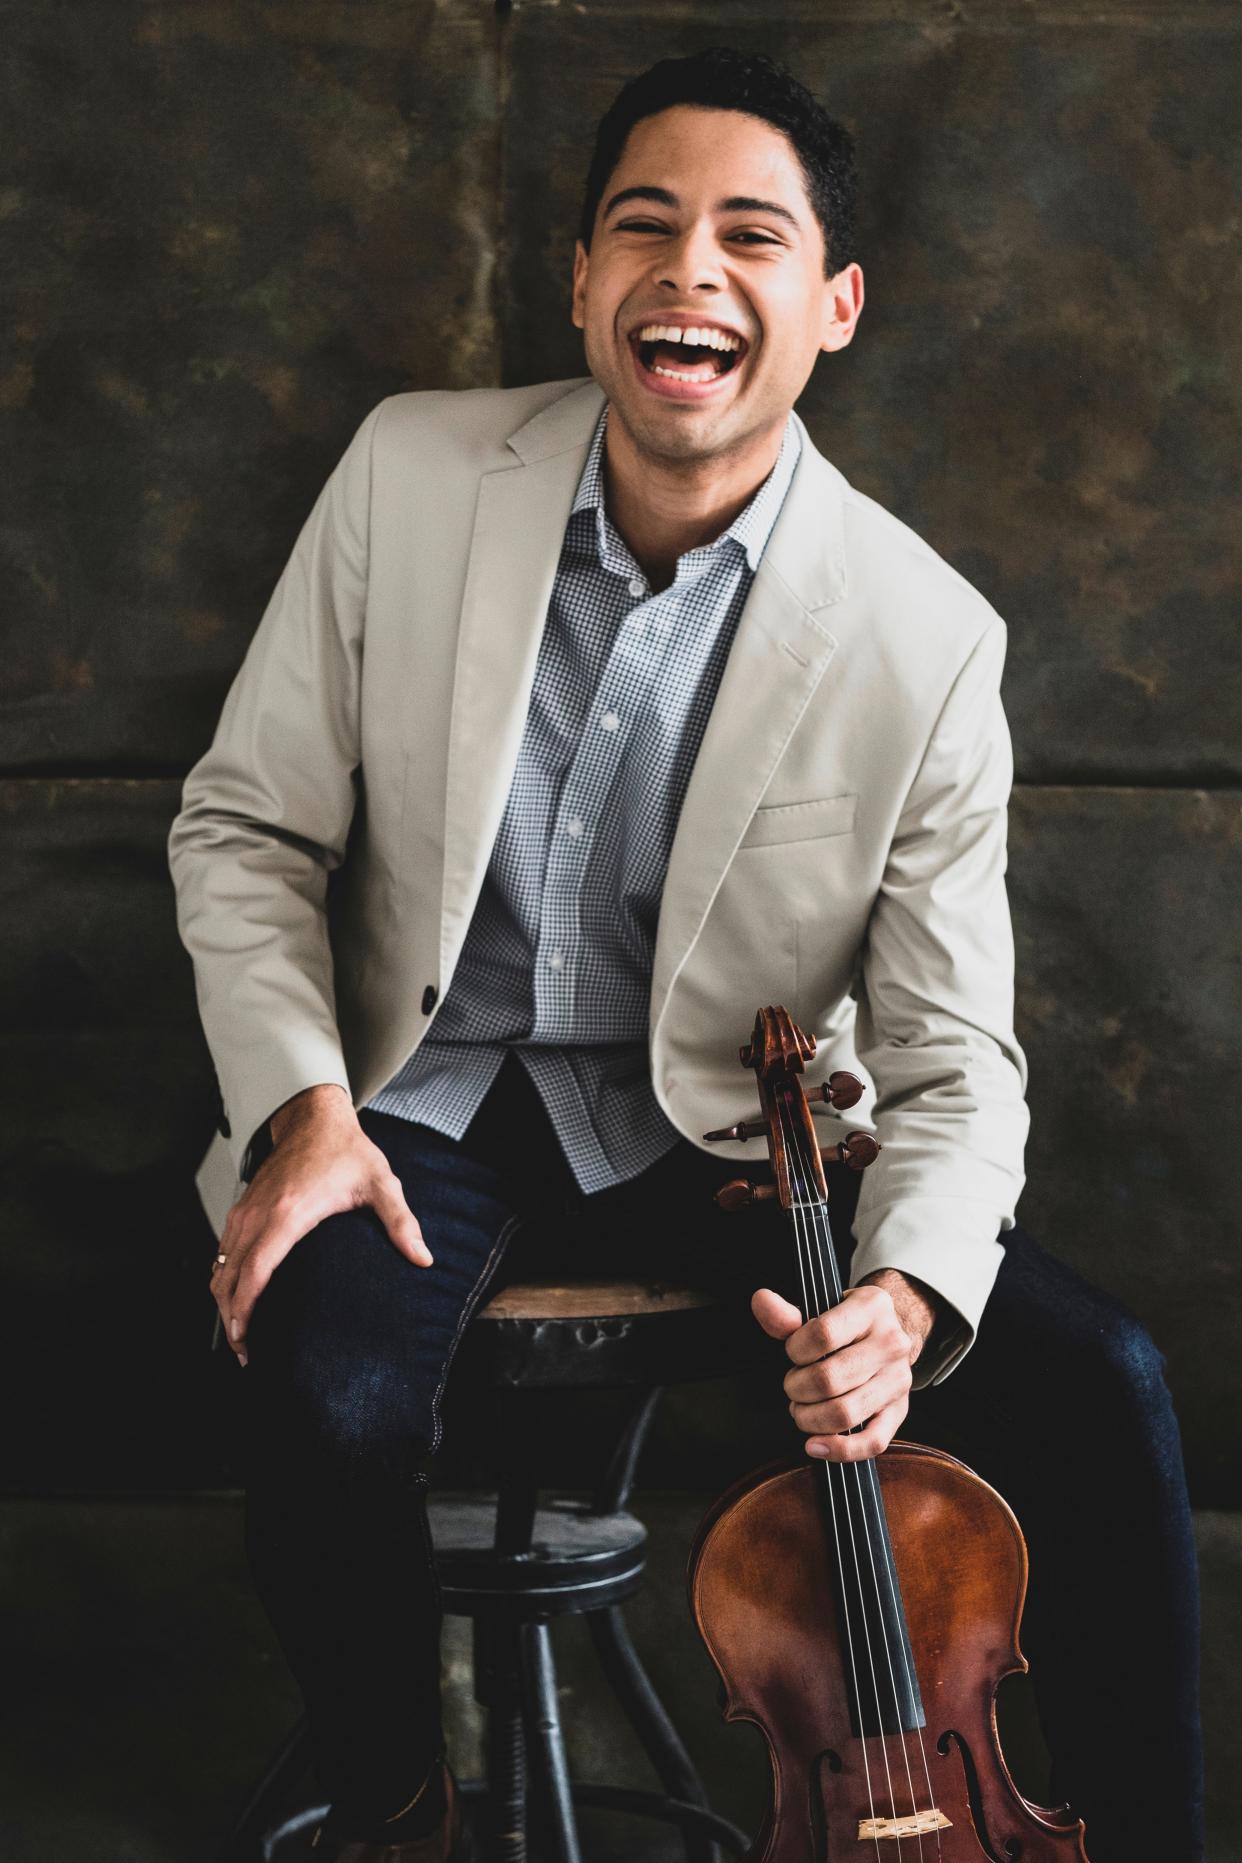 Violist Jordan Bak is a guest artist for the Sarasota Orchestra’s Discover Mozart concert “Genius of Youth.”